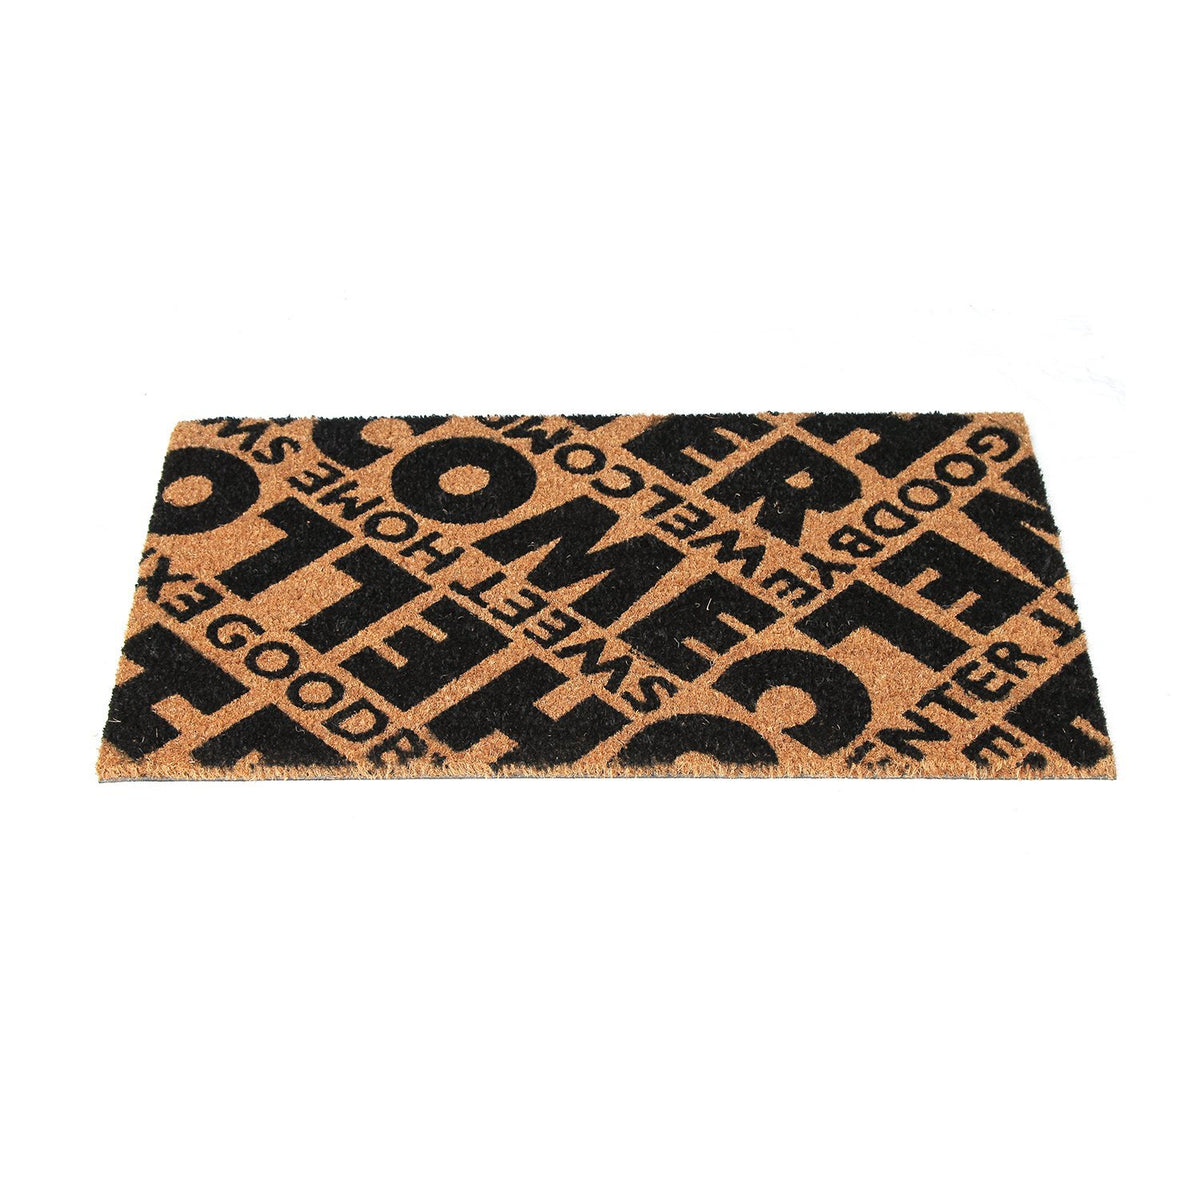 Sweet Home Design Coir Doormat - OnlyMat